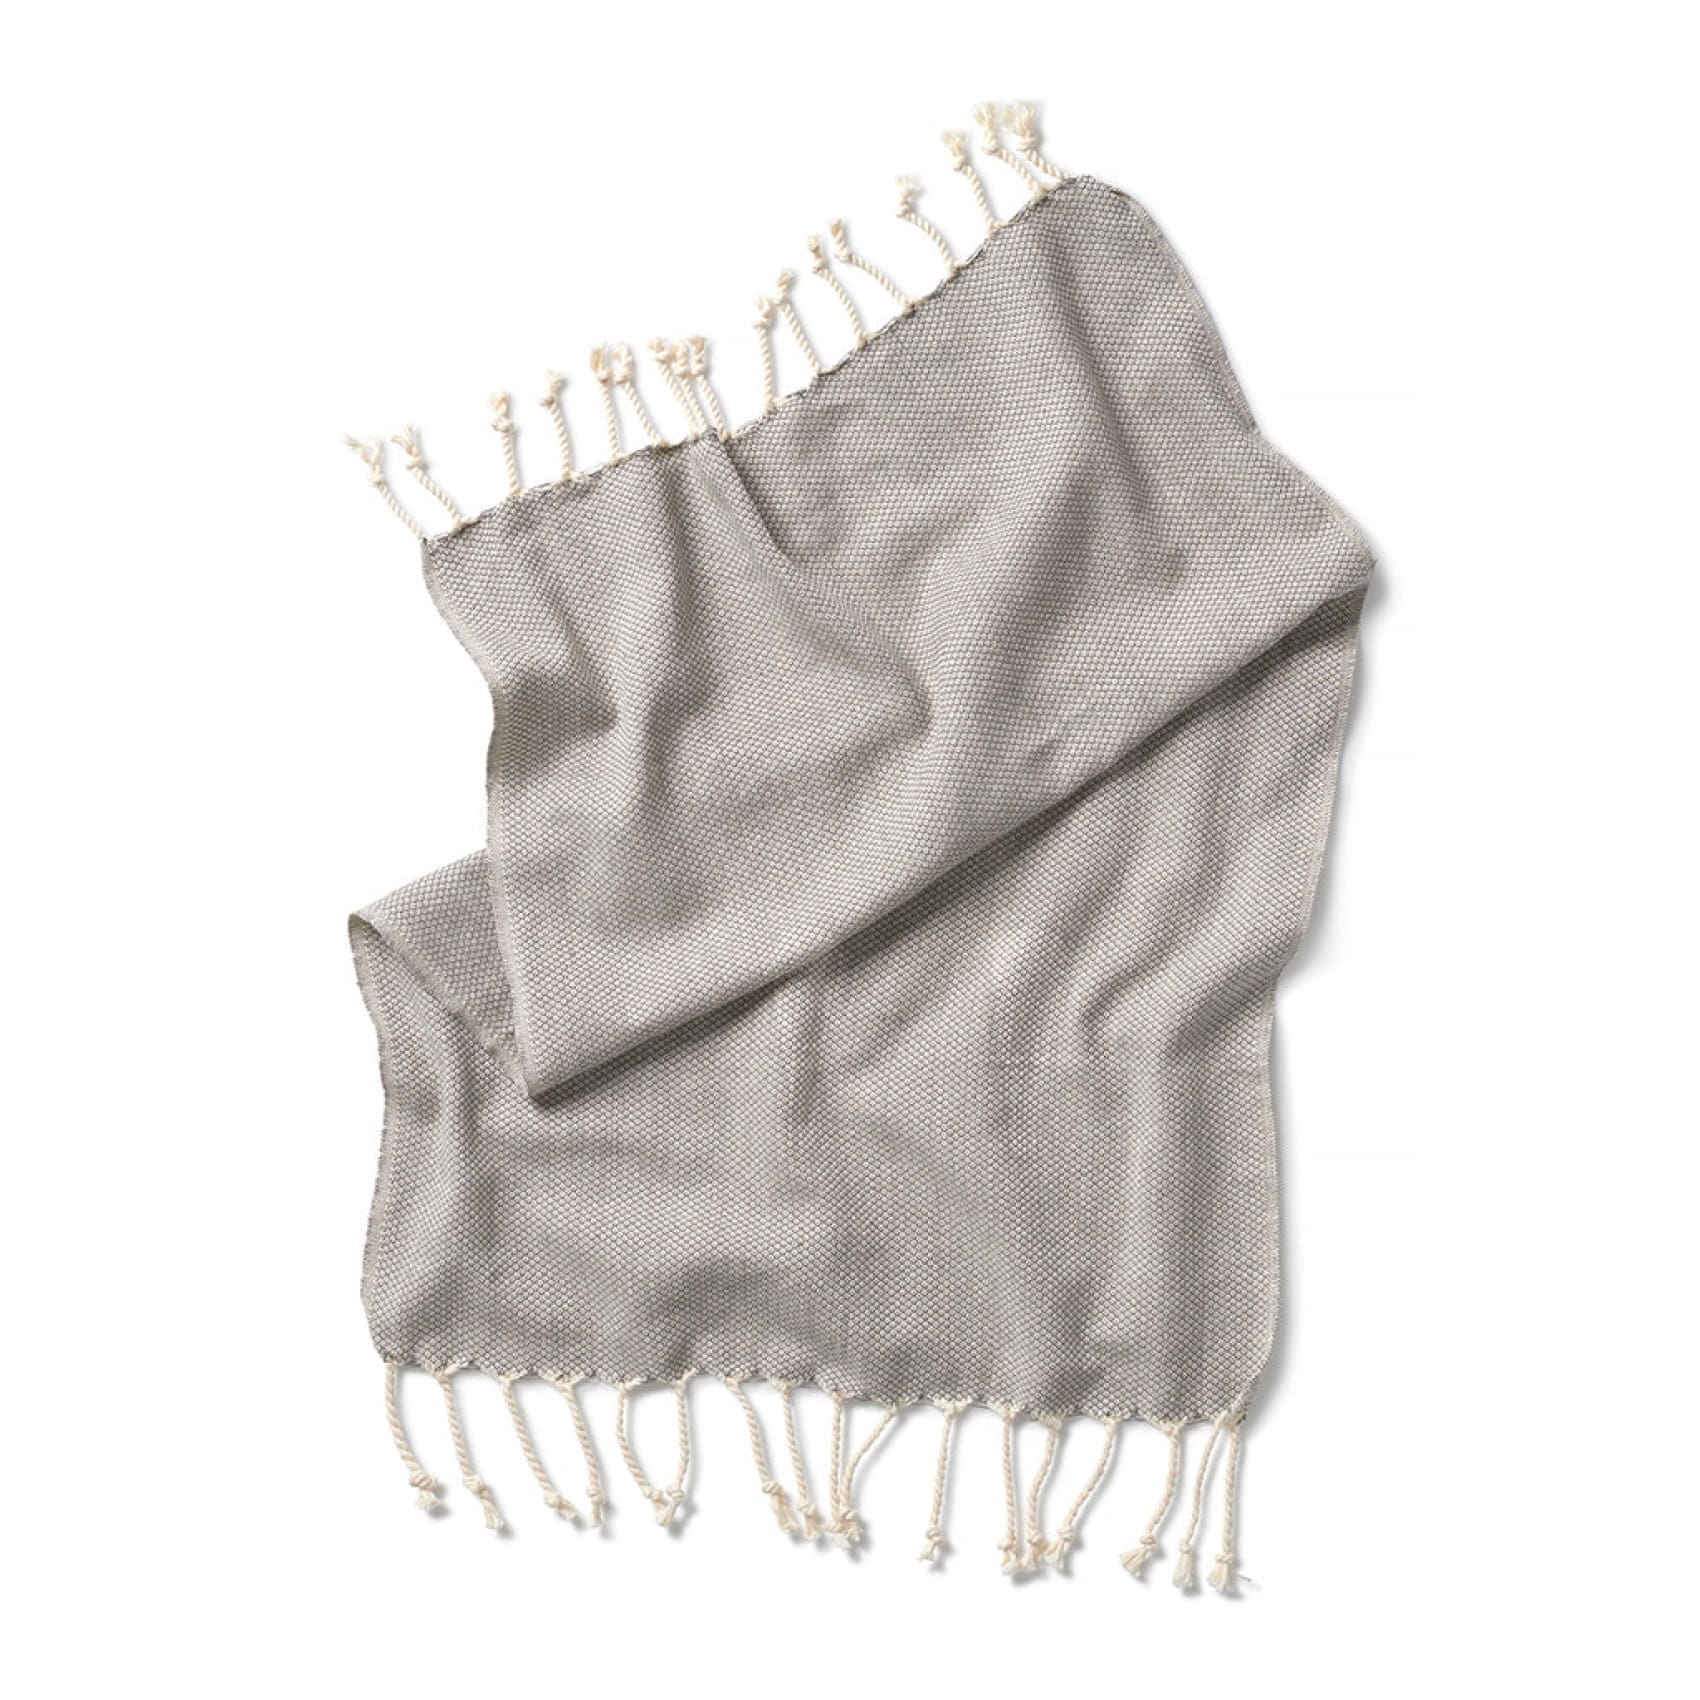 terazi-cotton-napkins-box-of-6-sky-ash-hand-towels-tea-luks-linen-outerwear-sleeve-headgear-797.jpg